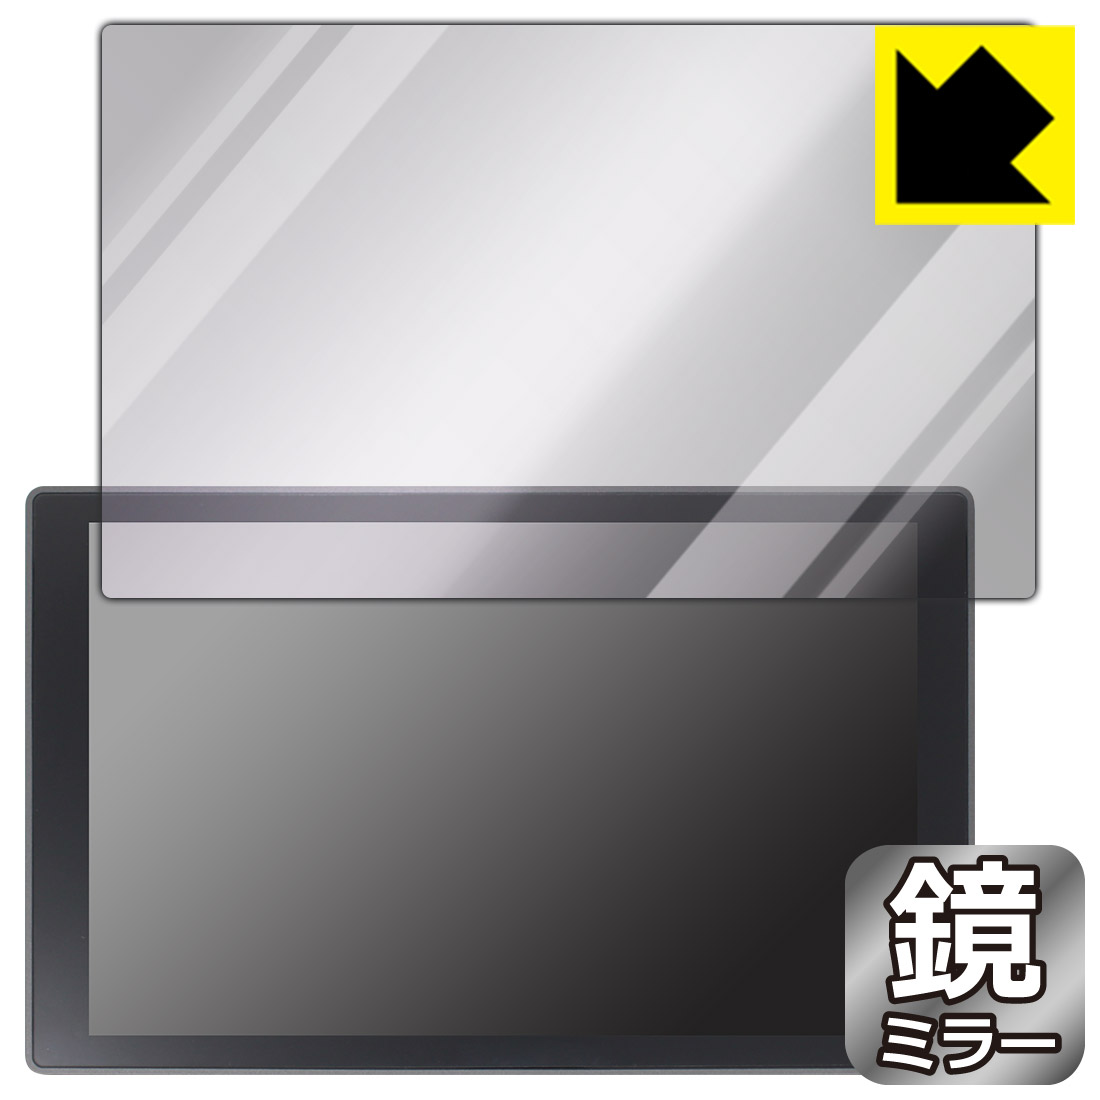 Mirror Shield 保護フィルム LILLIPUT A11 10.1インチ 4Kカメラトップモニター 日本製 自社製造直販